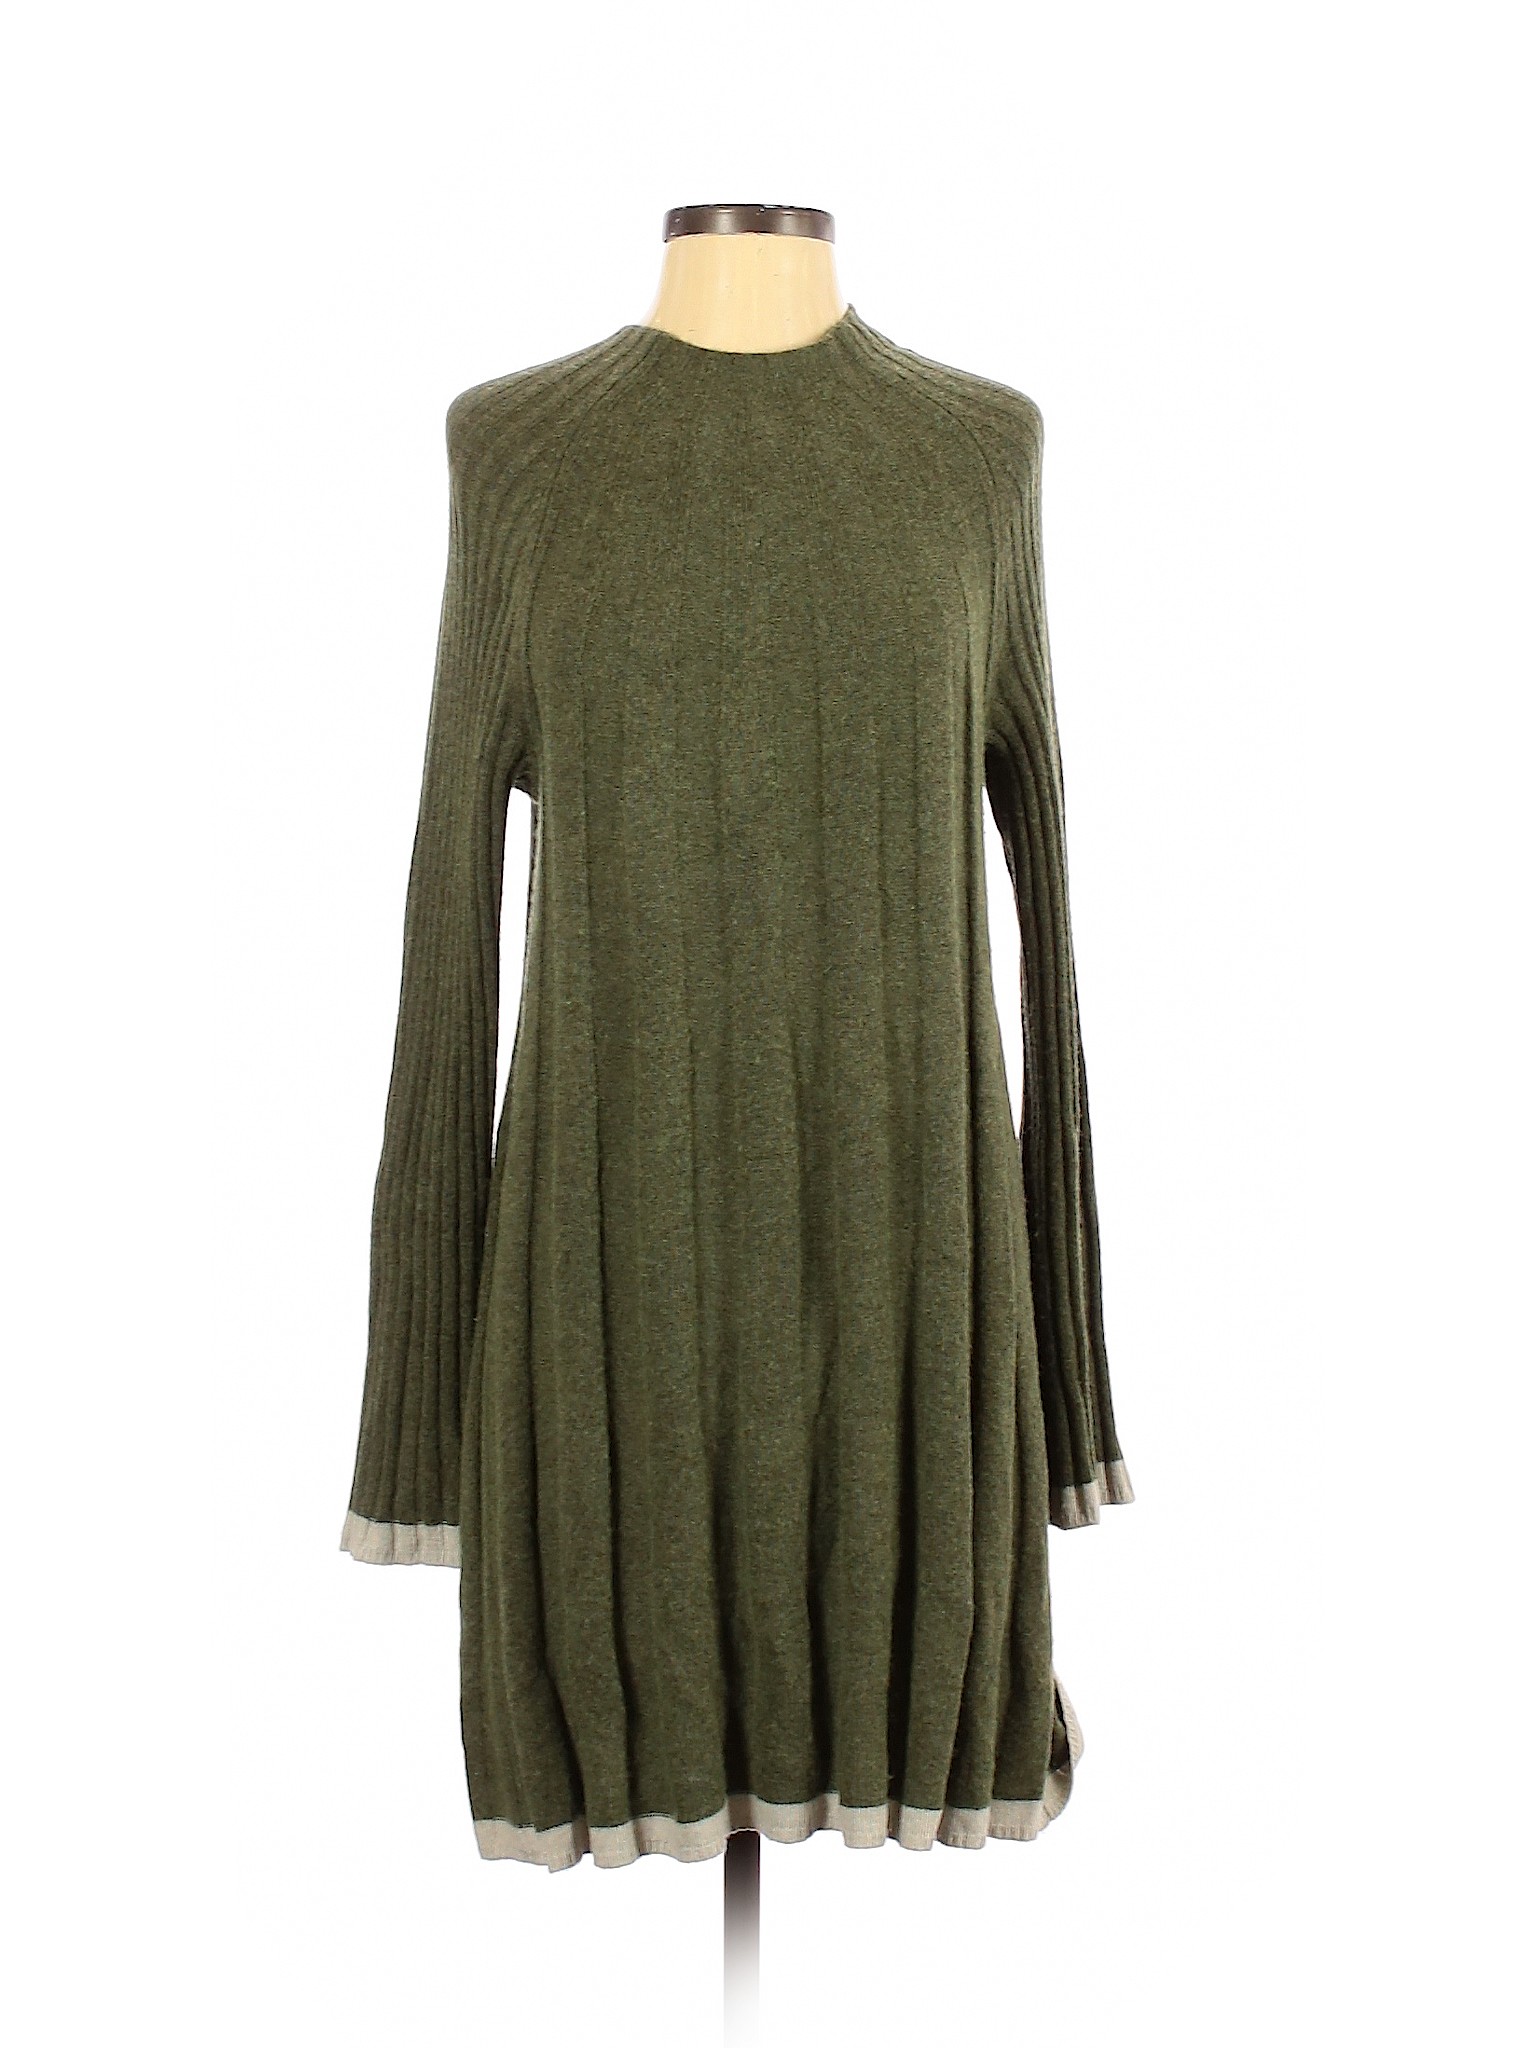 Anthropologie Women Green Casual Dress S | eBay